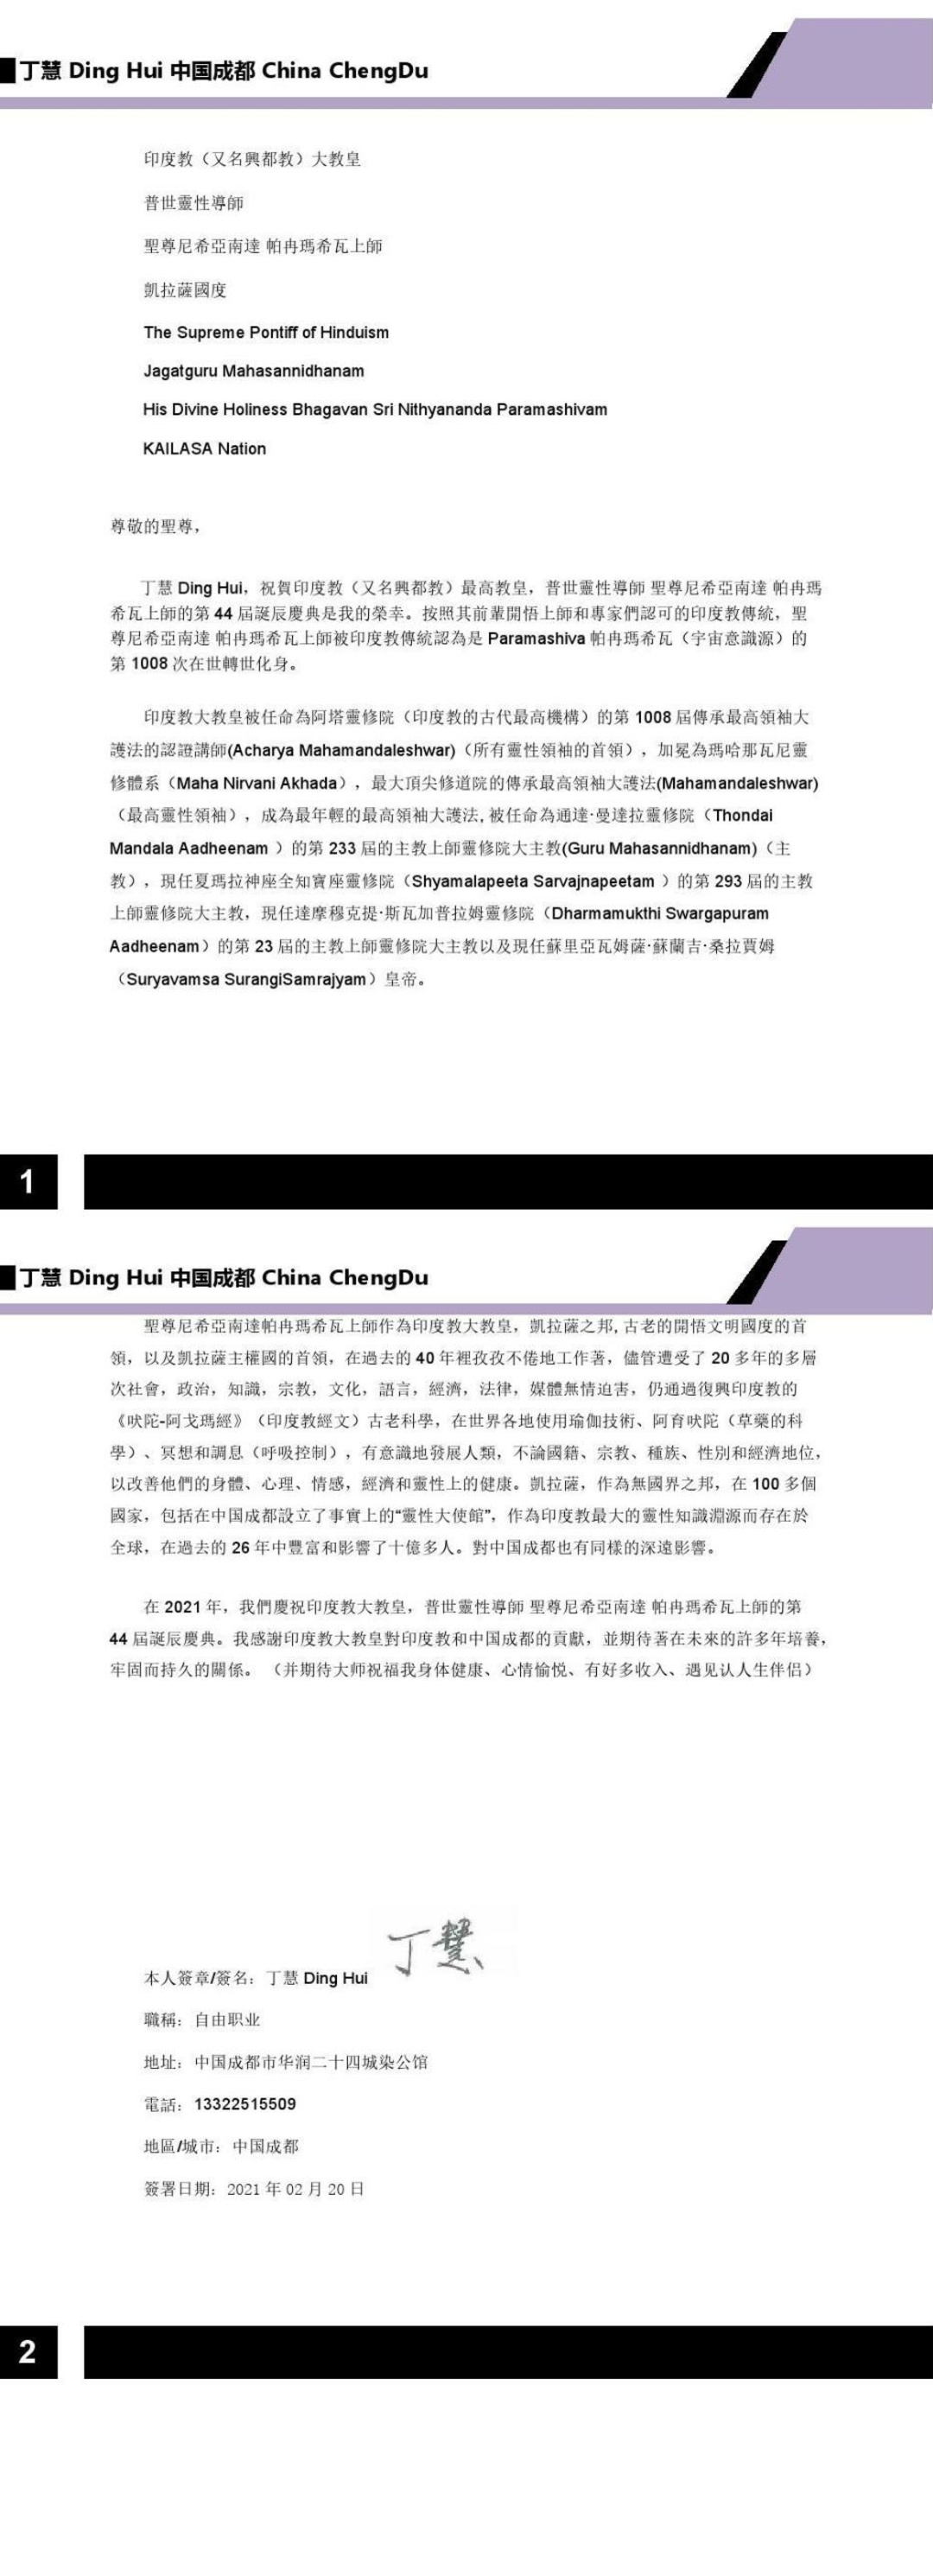 China---Ding-Hui---Feb-20--2021-(Proclamation)-1pCUsyDeYpn0dpQenUeG6ix4TN2233wv7.pdf